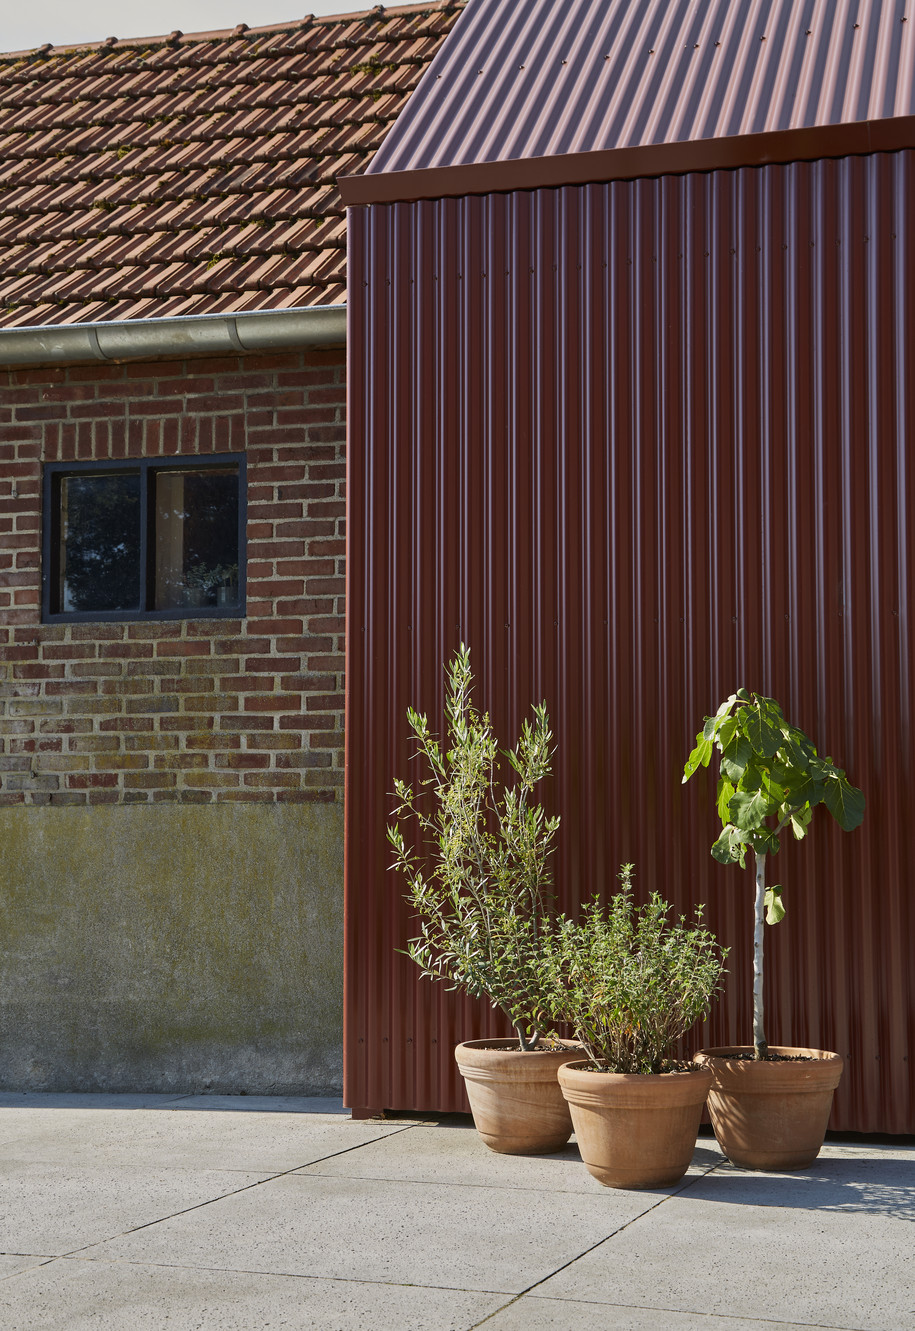 Archisearch Outdoor living space in Nederweert, Netherlands | by De Nieuwe Context architecture office